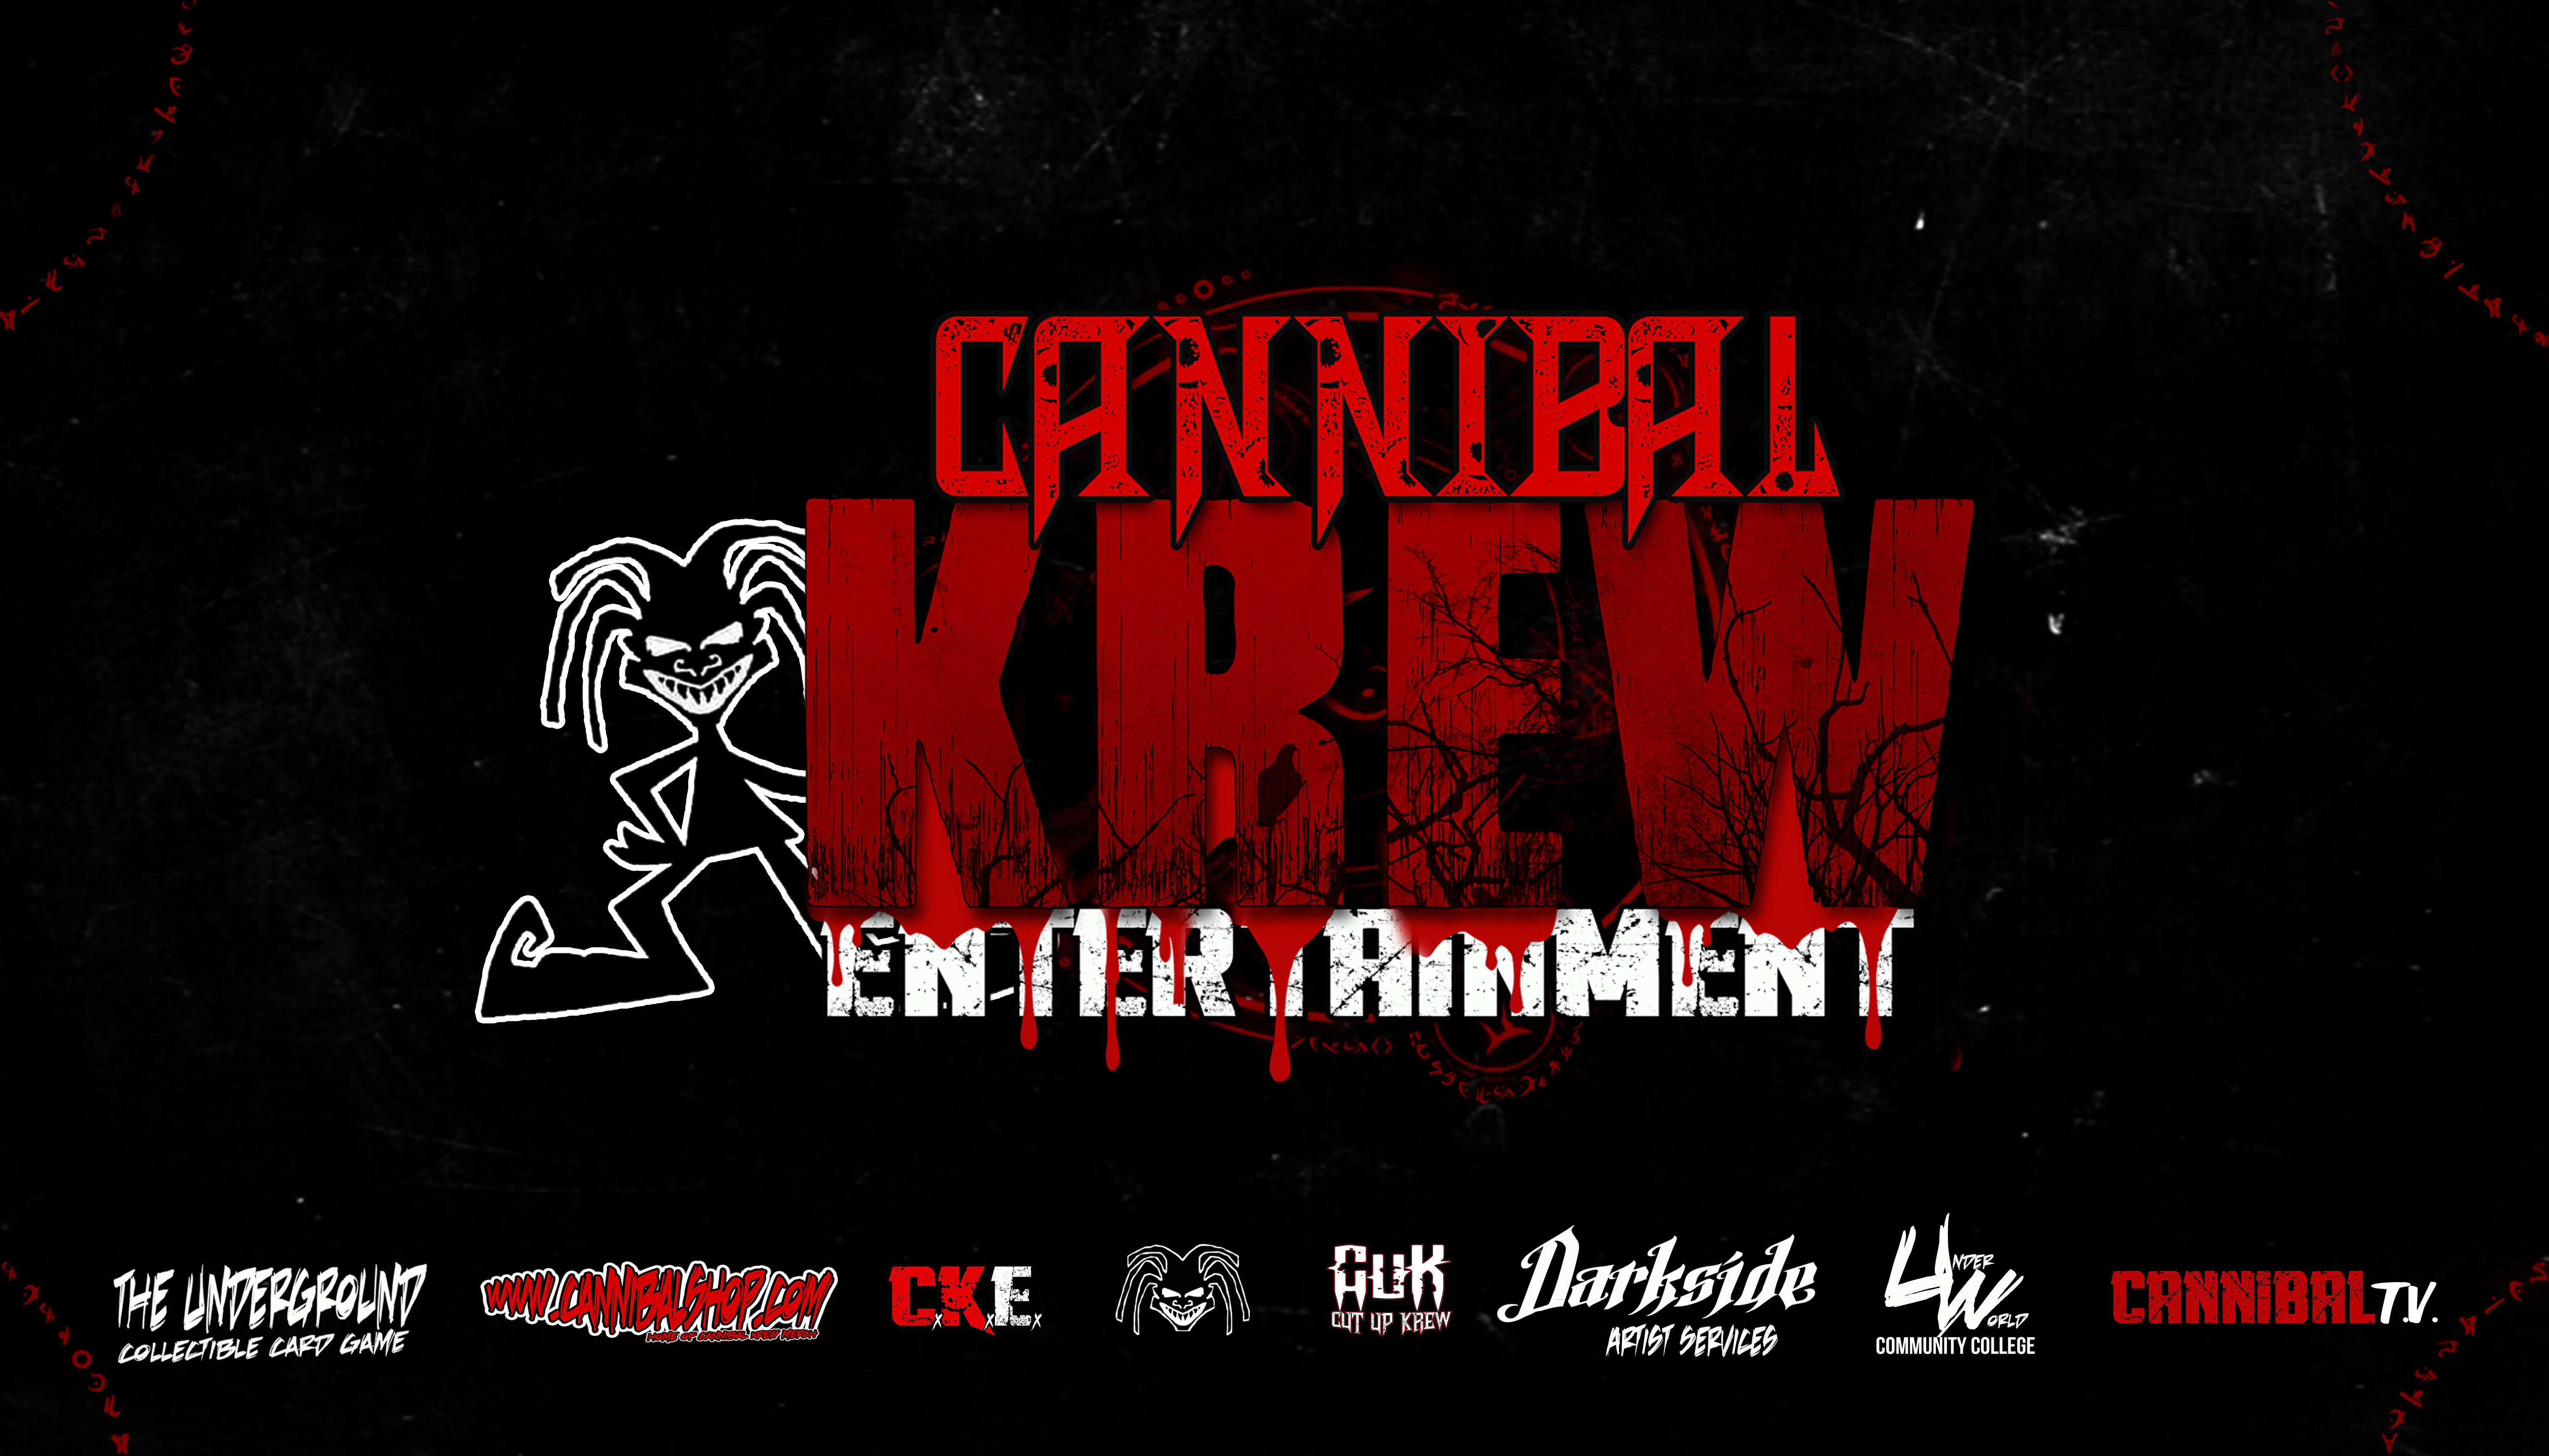 Cannibal Krew Entertainment